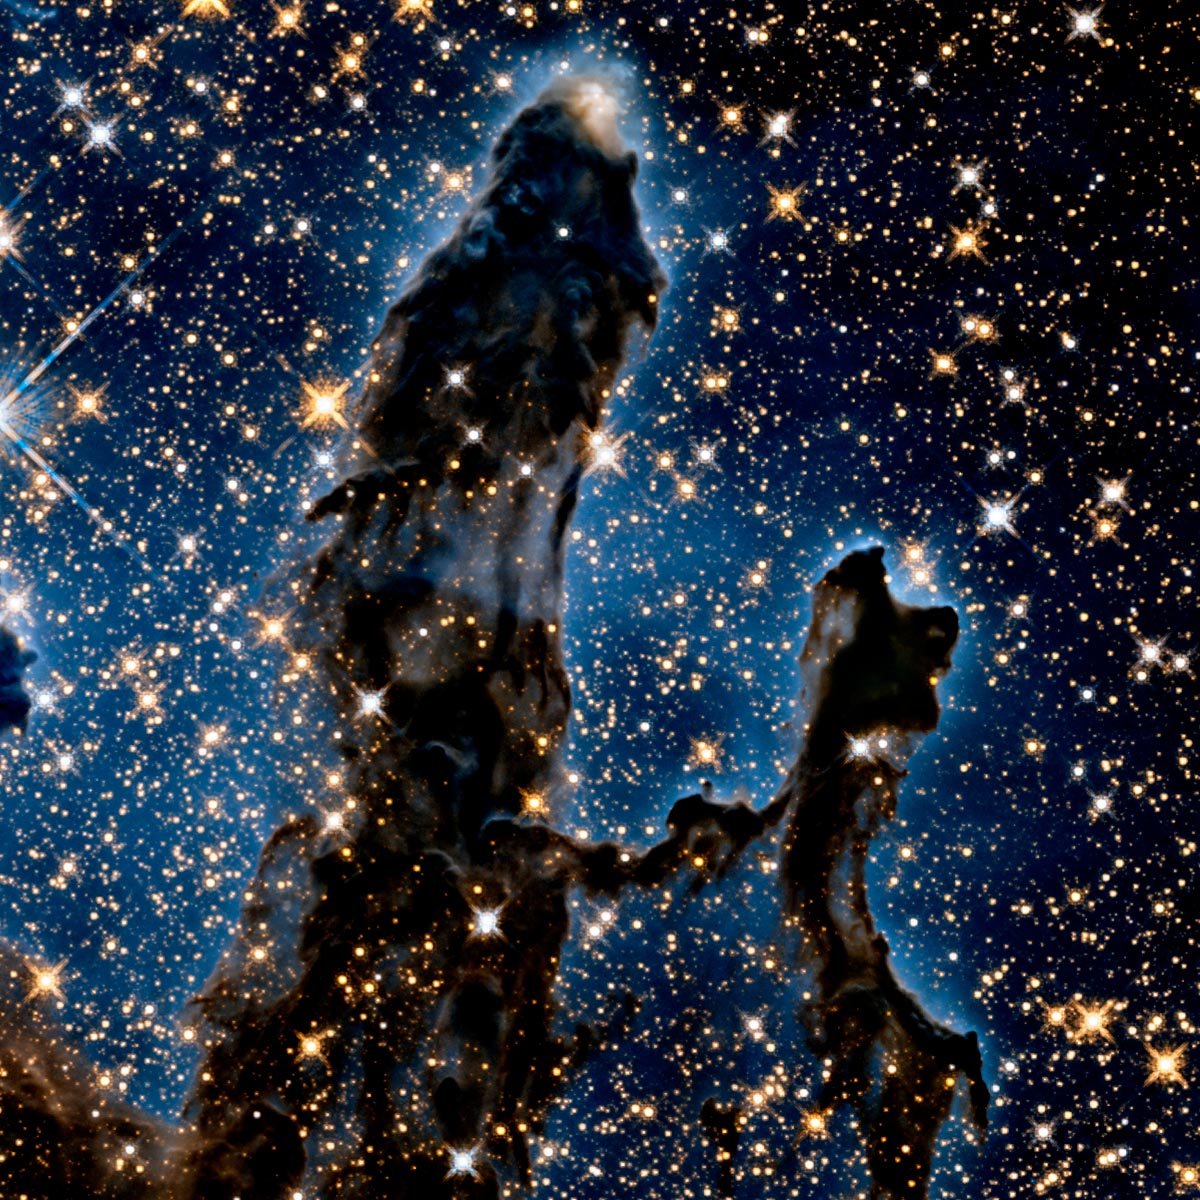 Pillars of Creation (The Eagle Nebula) by NASA